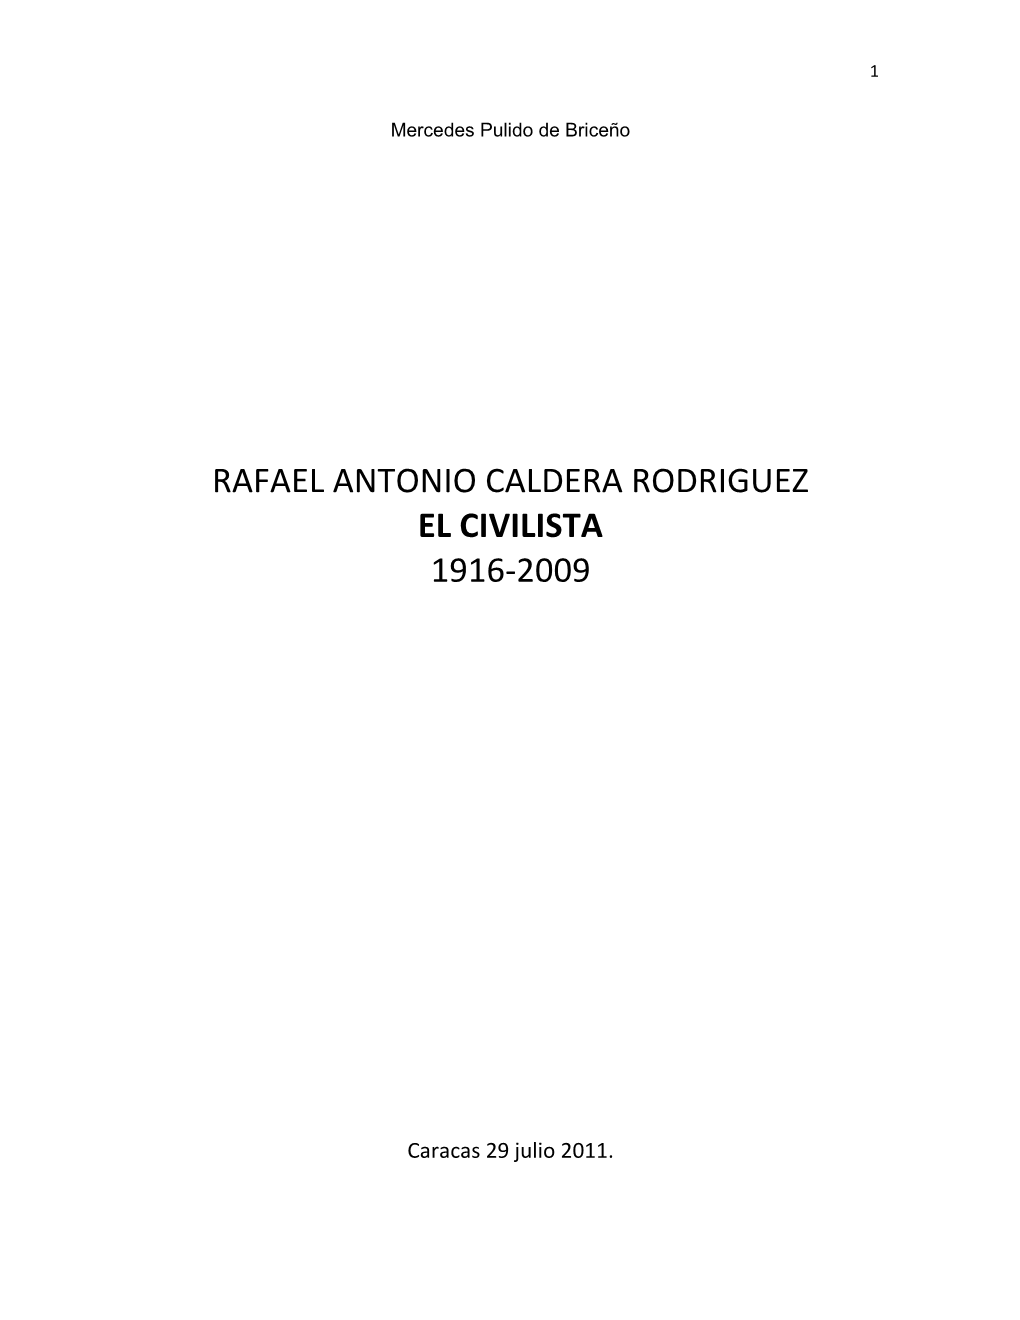 Rafael Antonio Caldera Rodriguez El Civilista 1916-2009